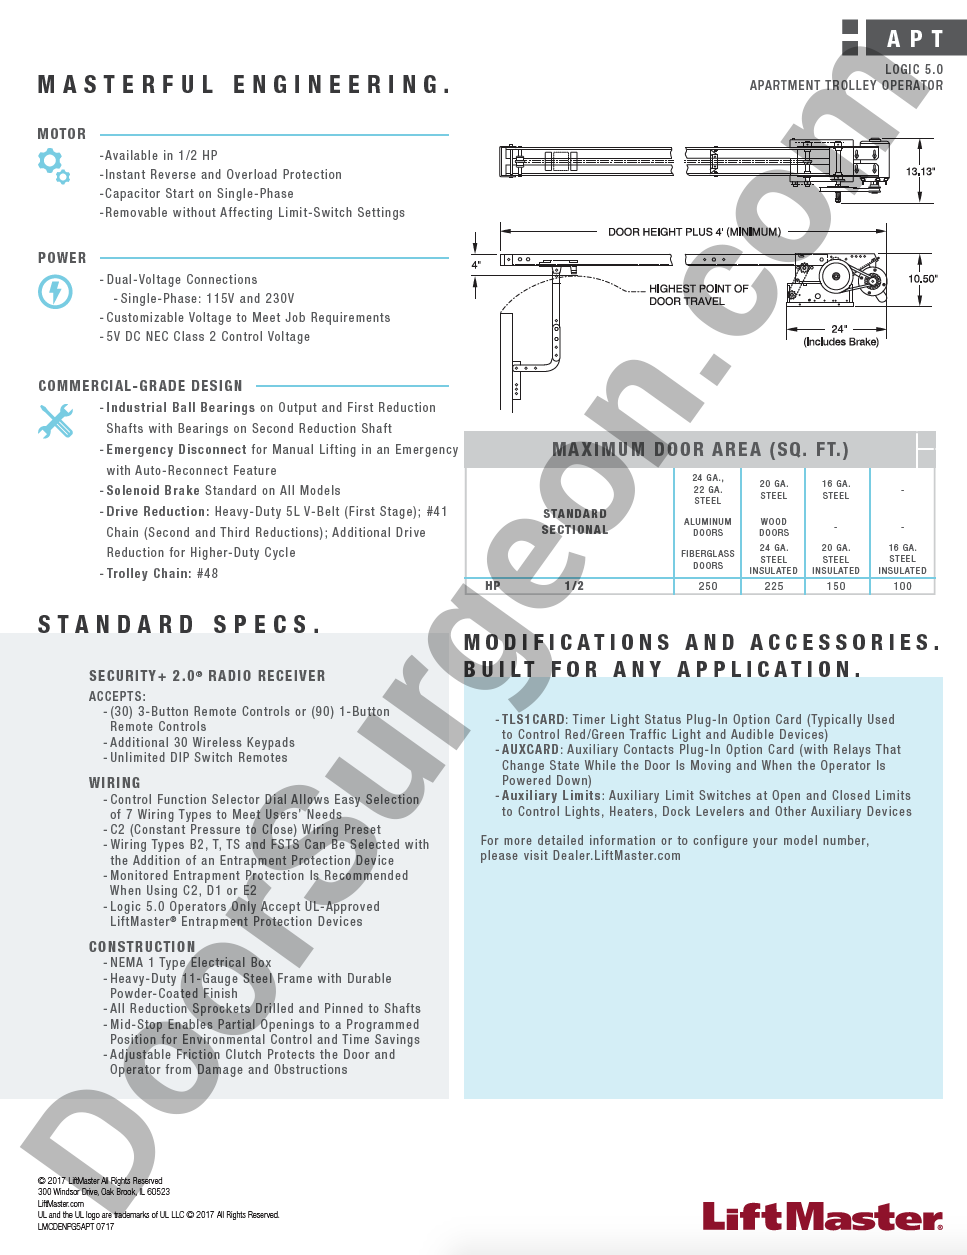 Liftmaster APT trolley Operator standard specifications sheet.